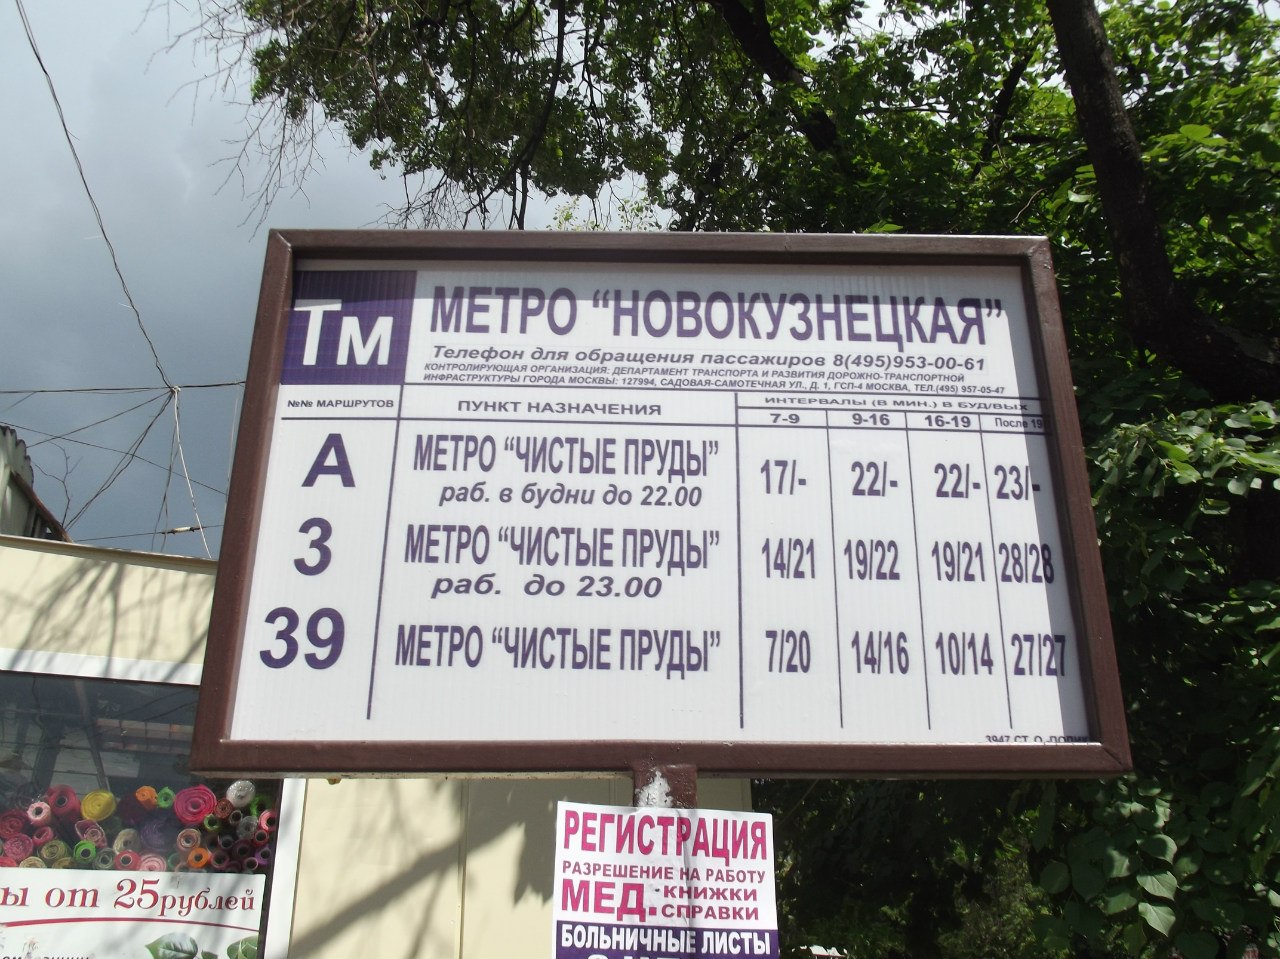 Maskava — Station signs & displays